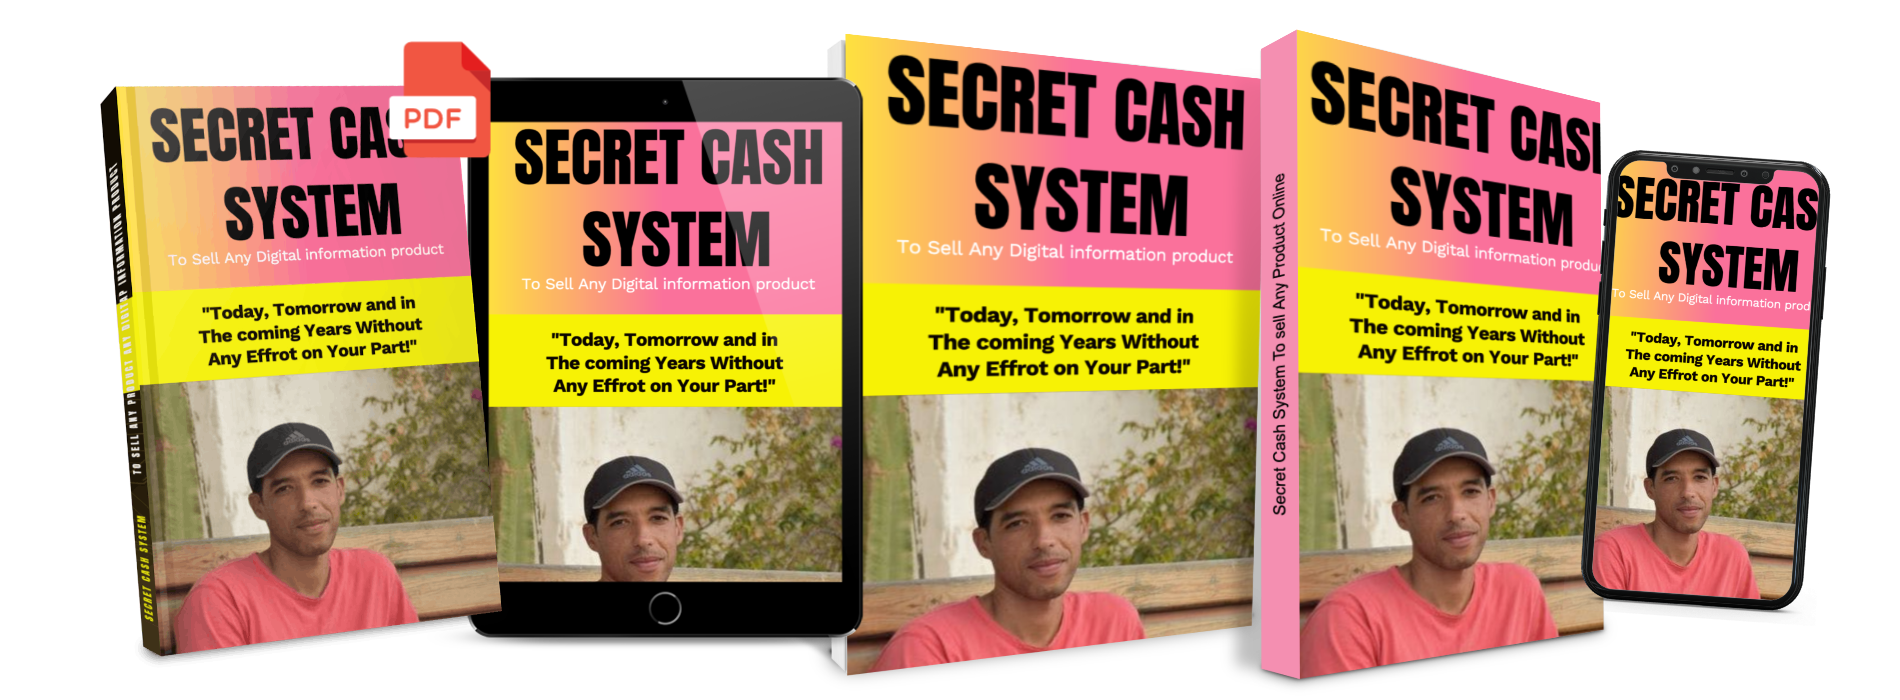 cash system